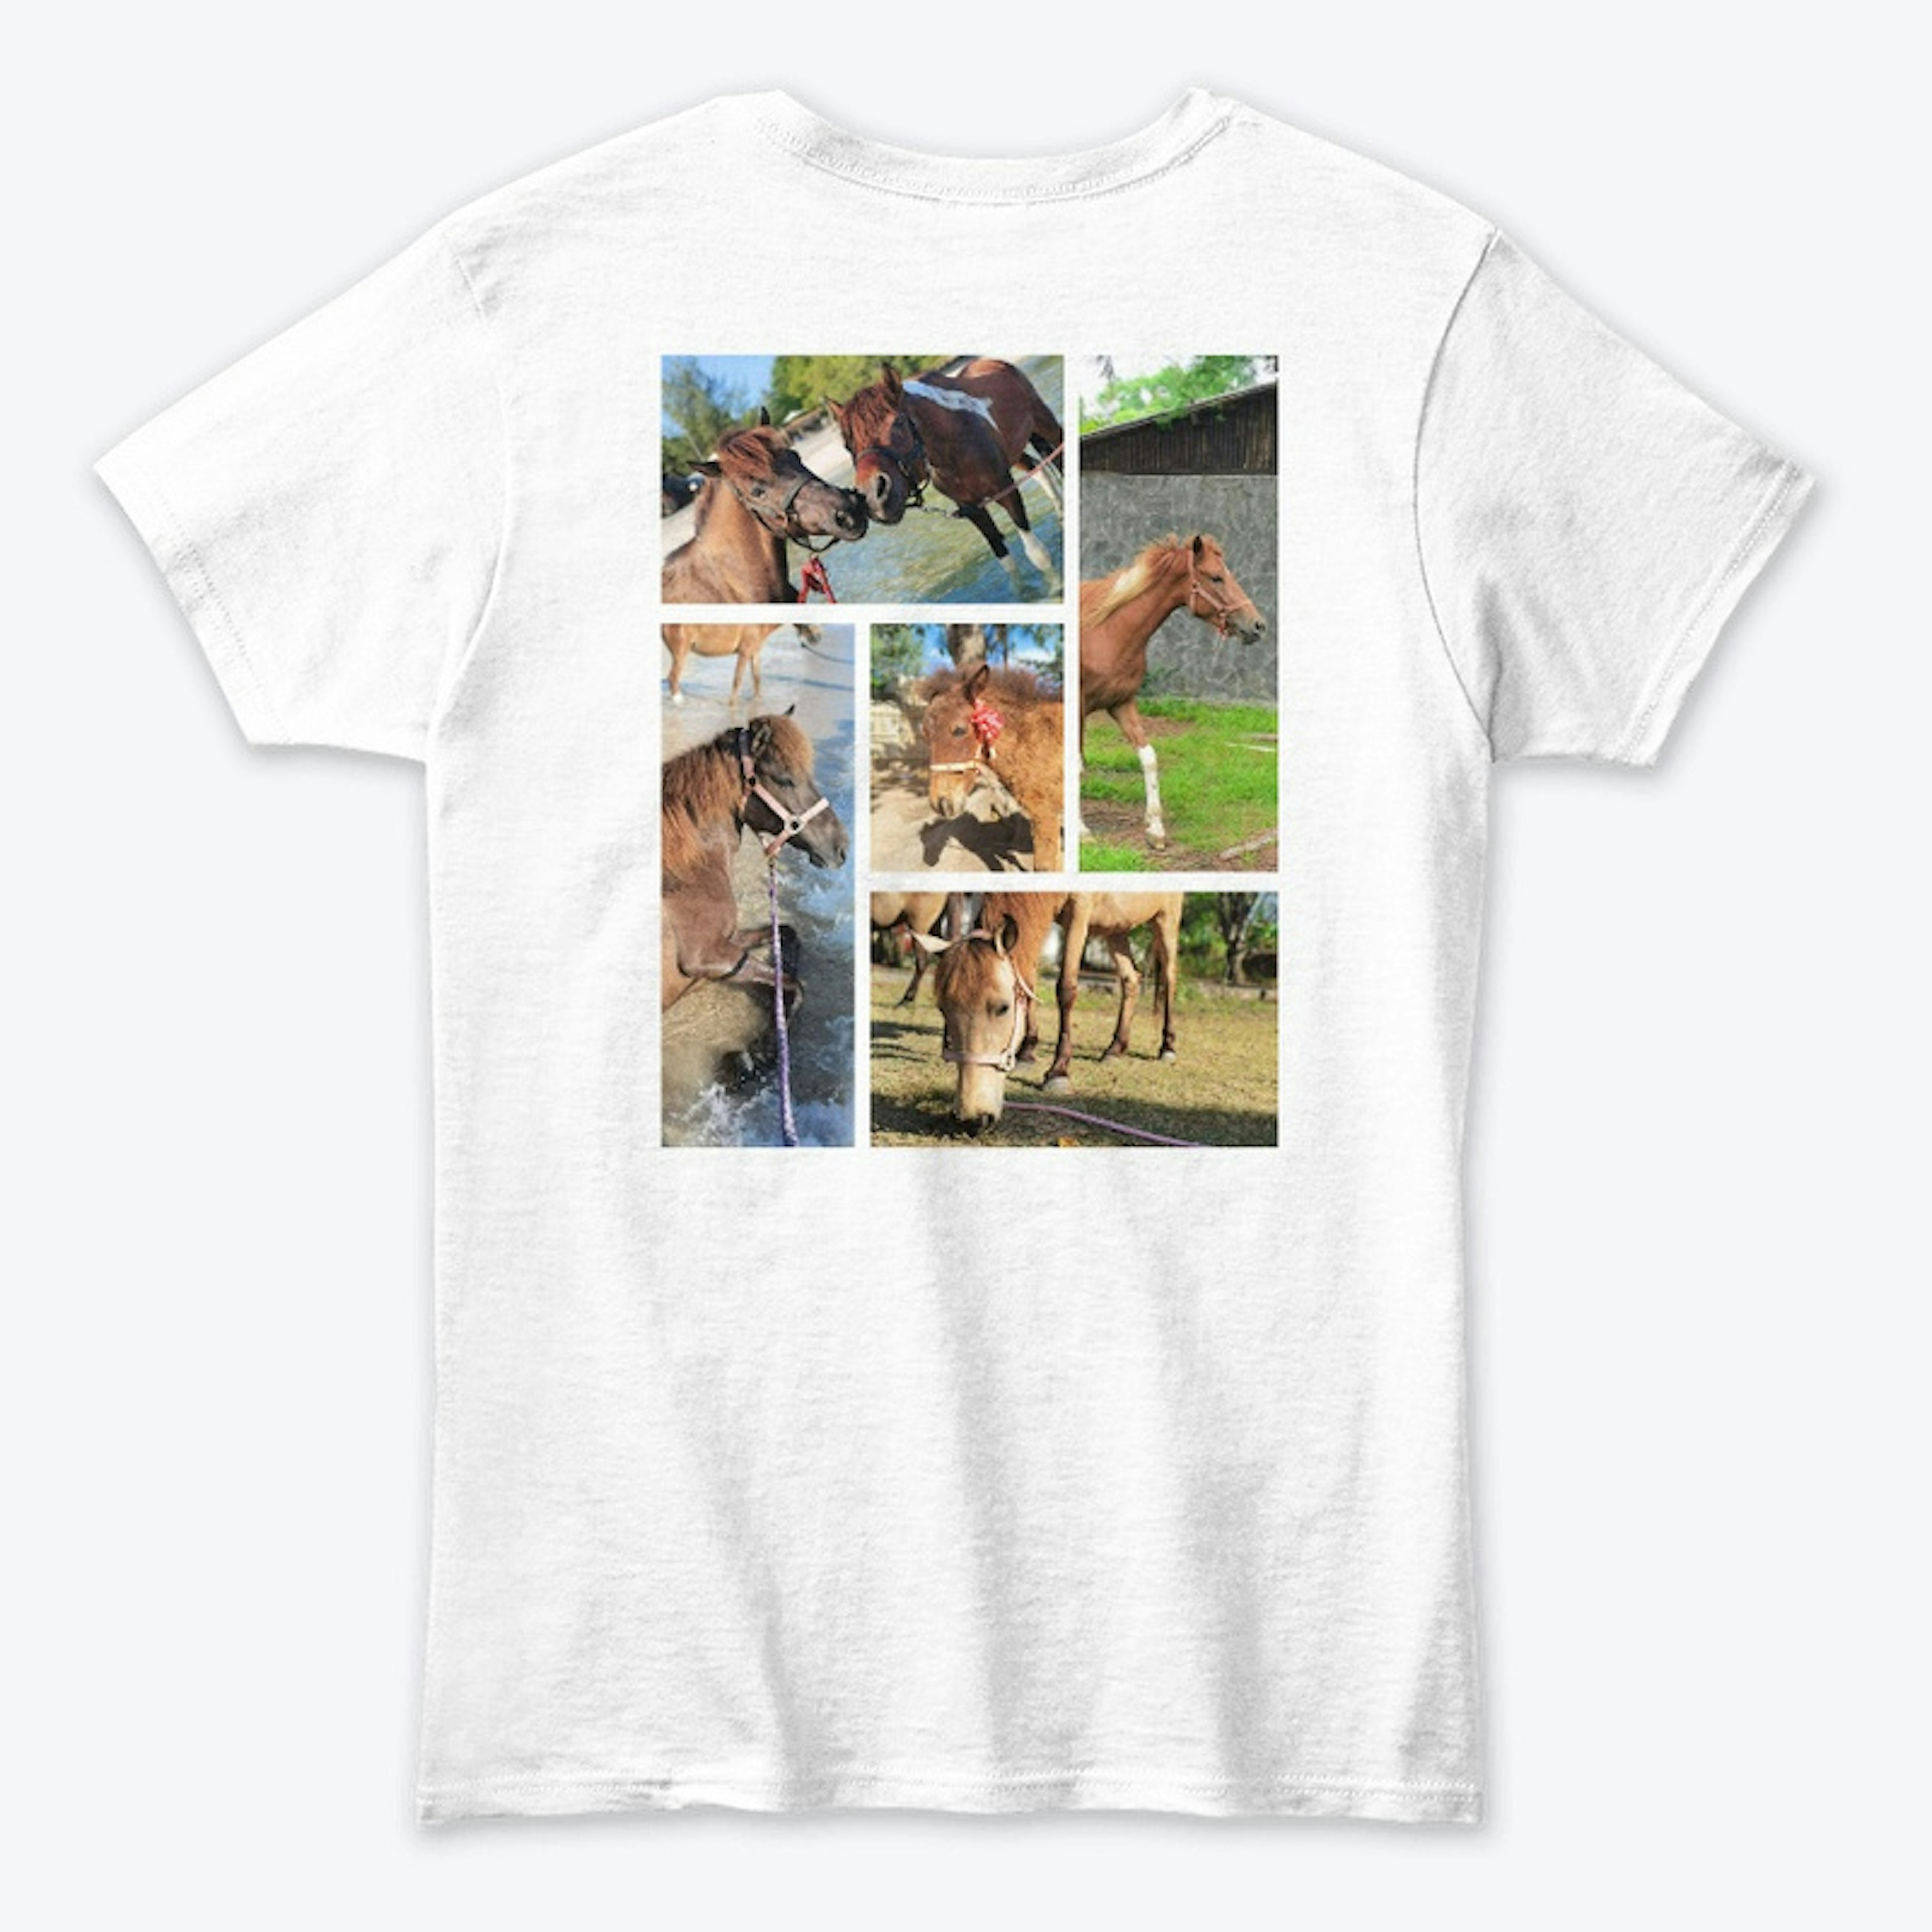 Horses of Gili T shirt